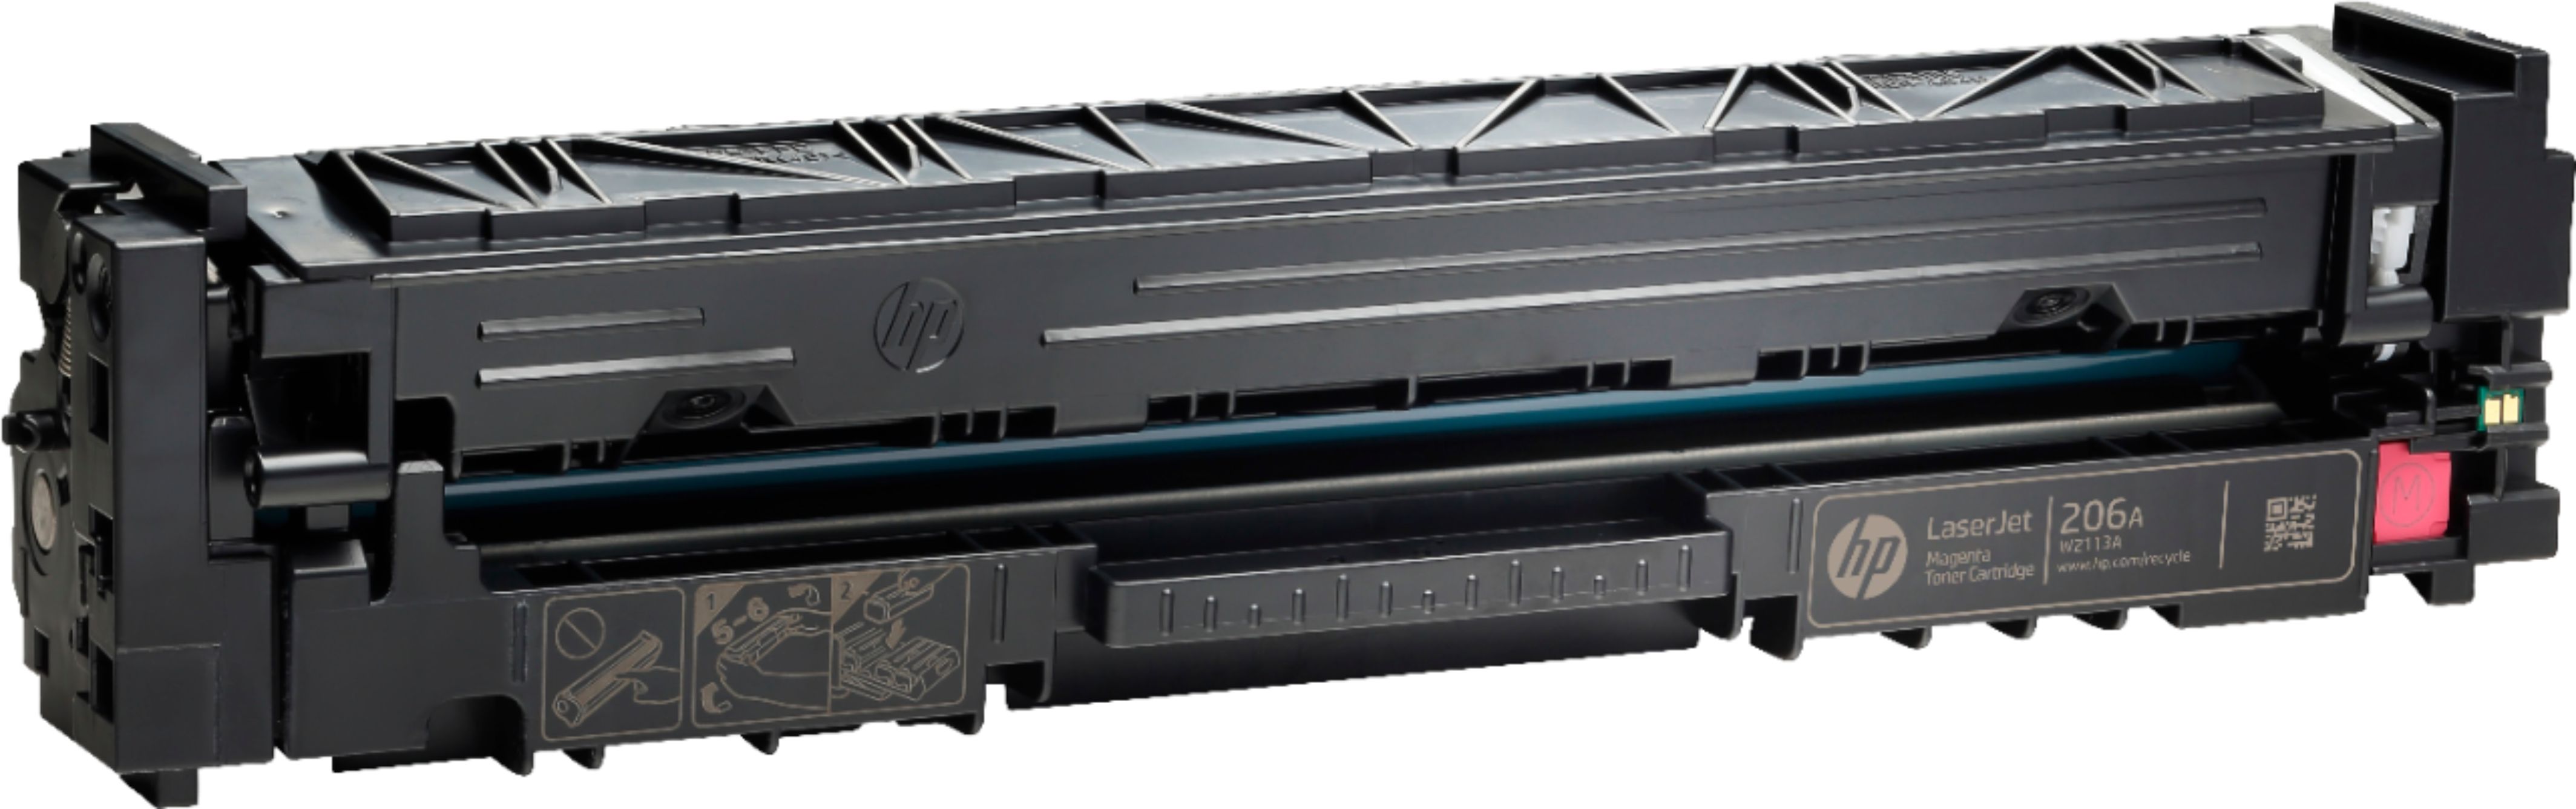 HP 216A Toner Cartridge 1 Set, Black C4910A, Cyan C4911A, Magenta C4912A